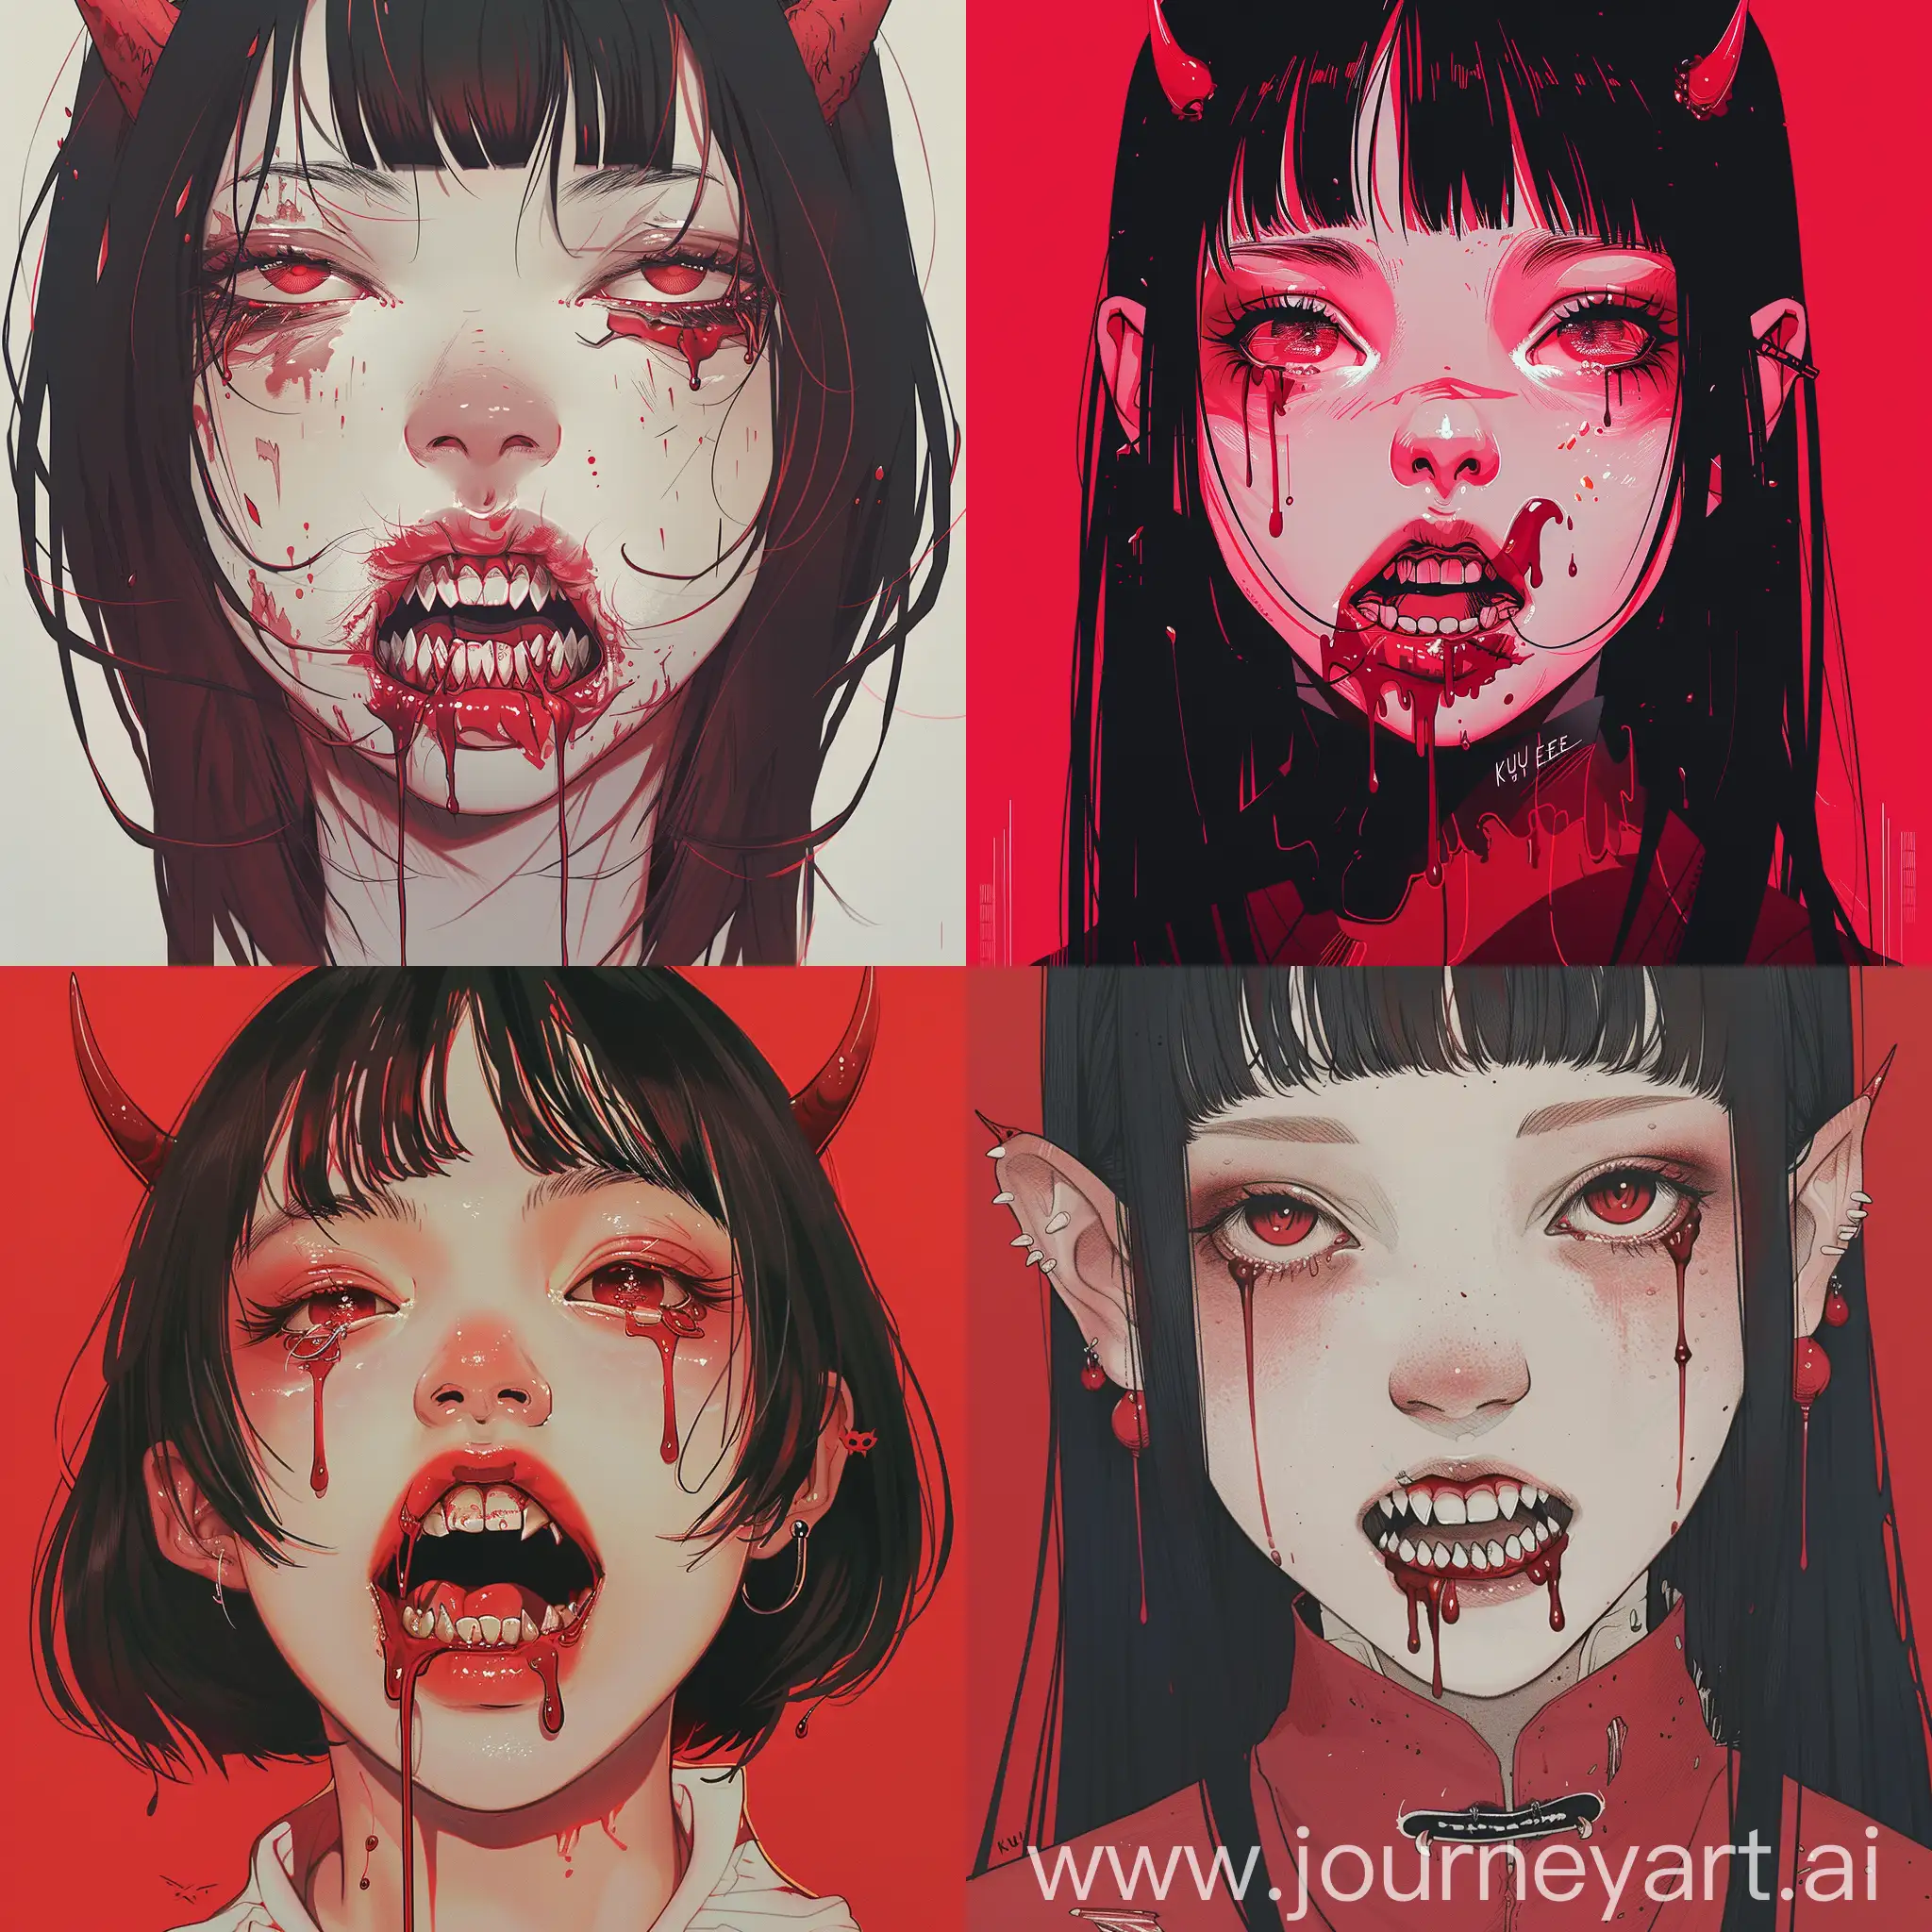 Sinister-Anime-Girl-with-Blood-Dripping-Teeth-Dark-Art-Illustration